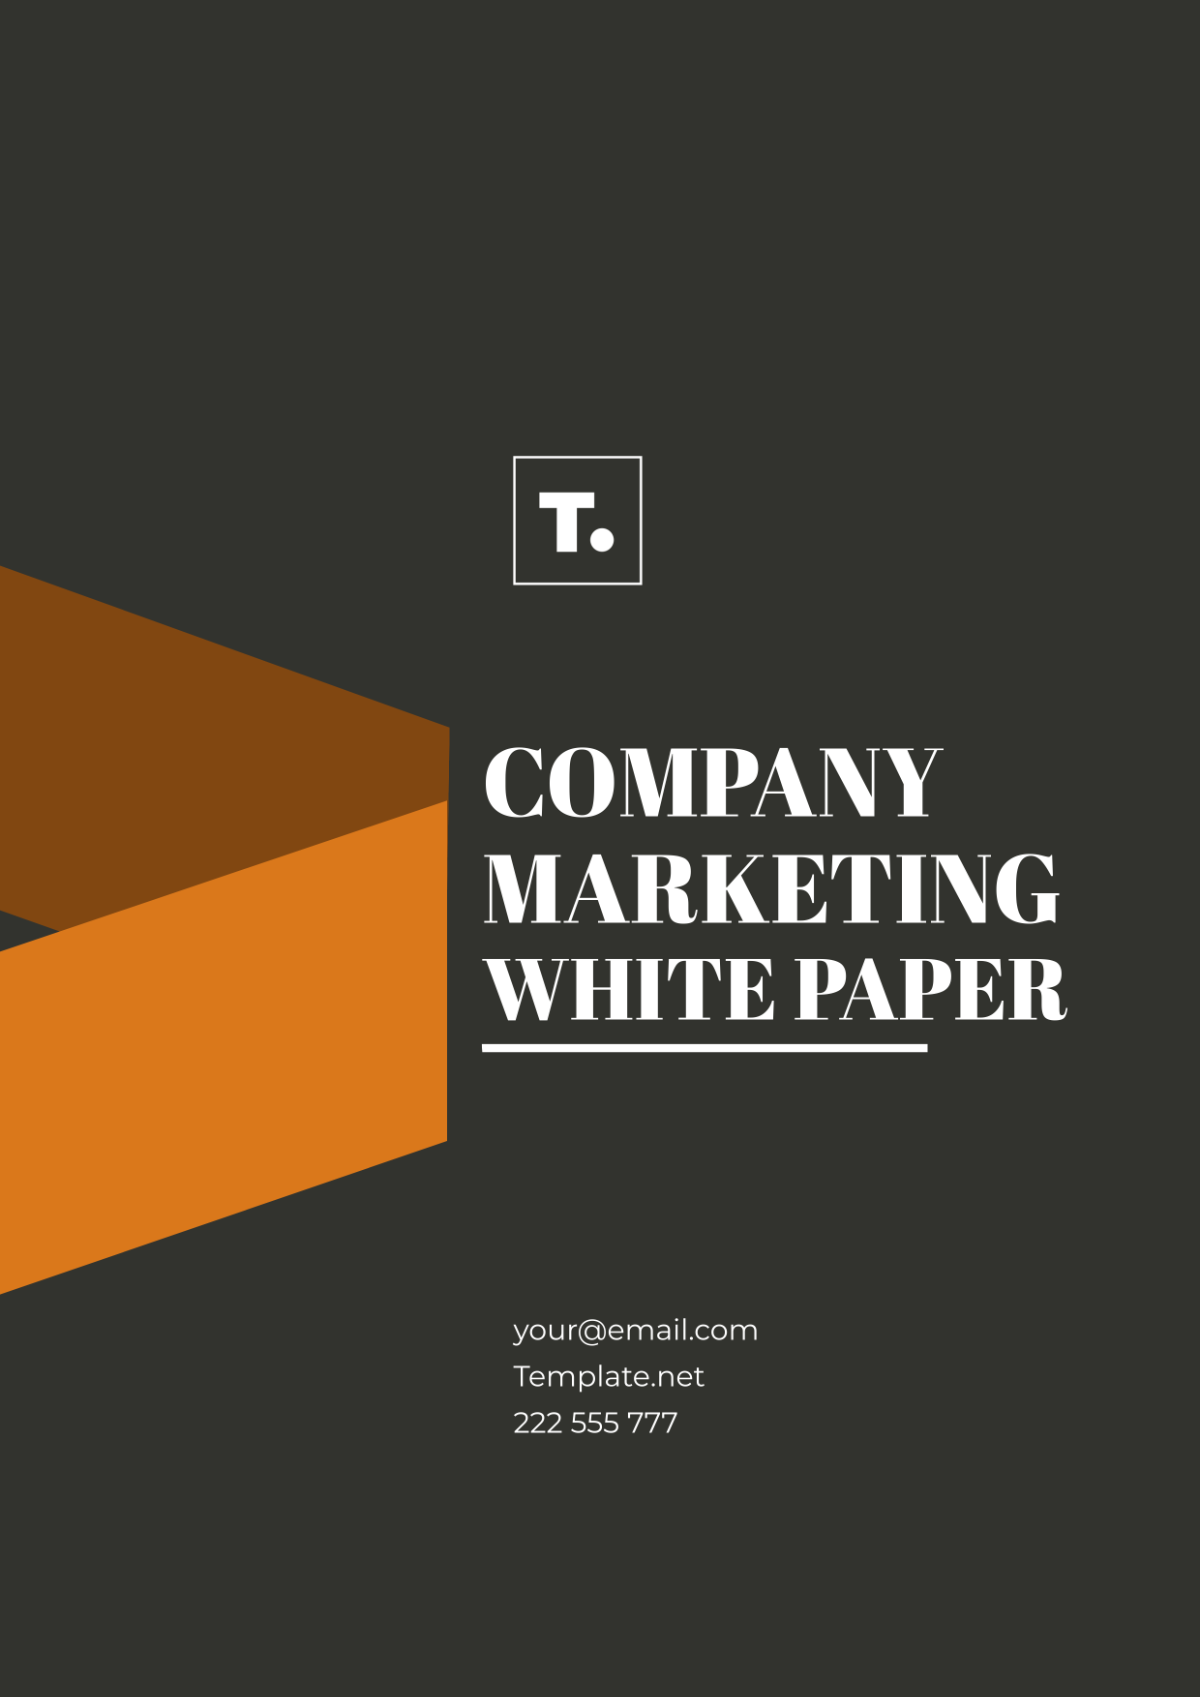 Company Marketing White Paper Template